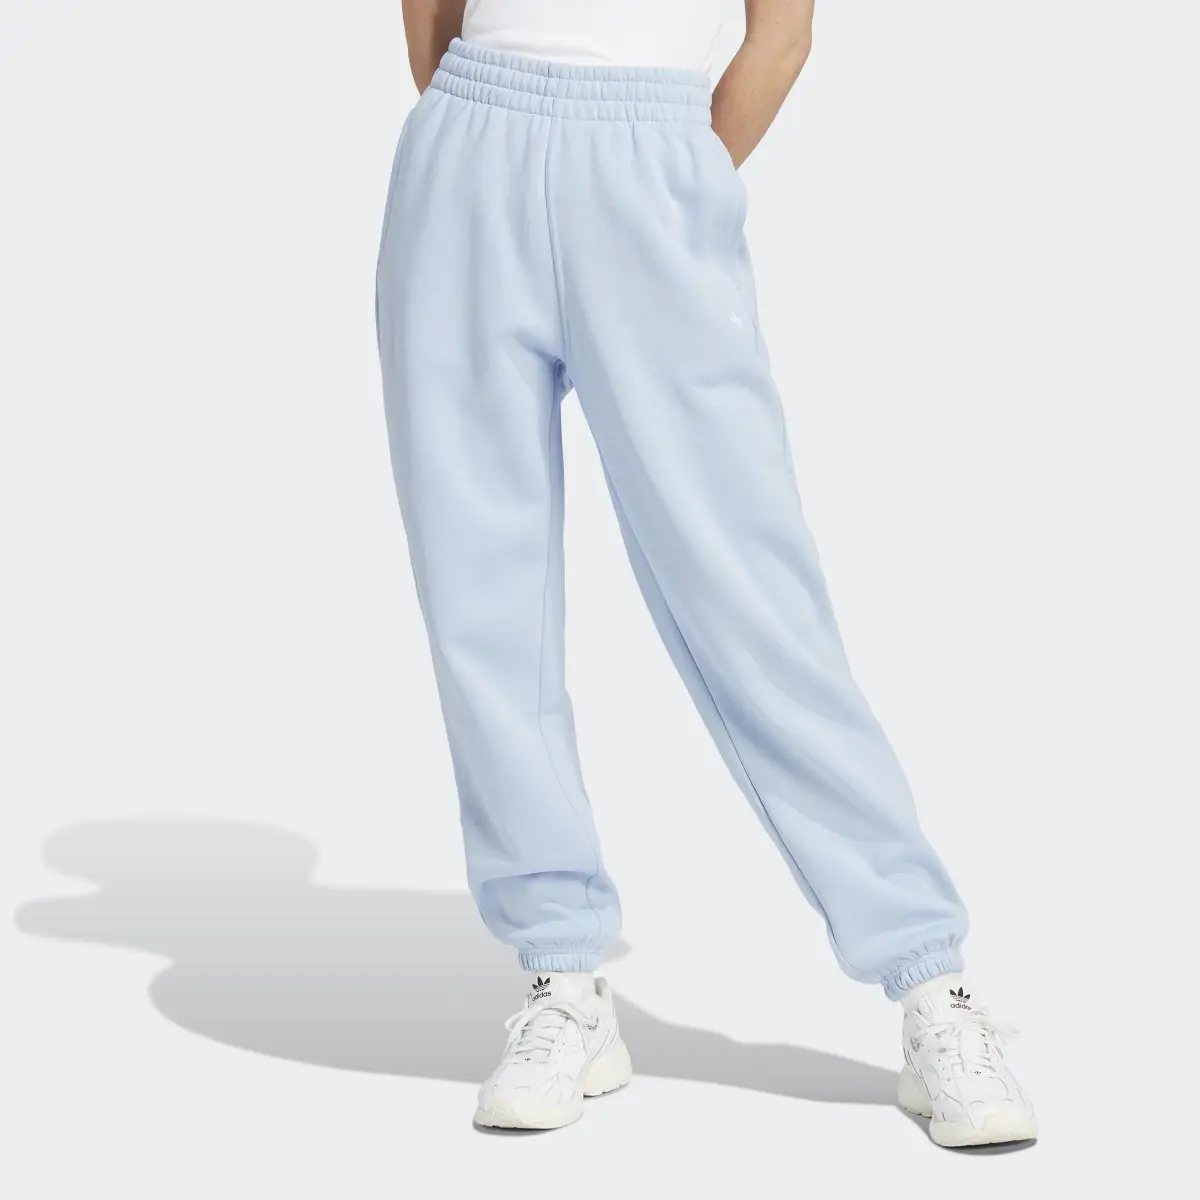 Adidas Pants. 1